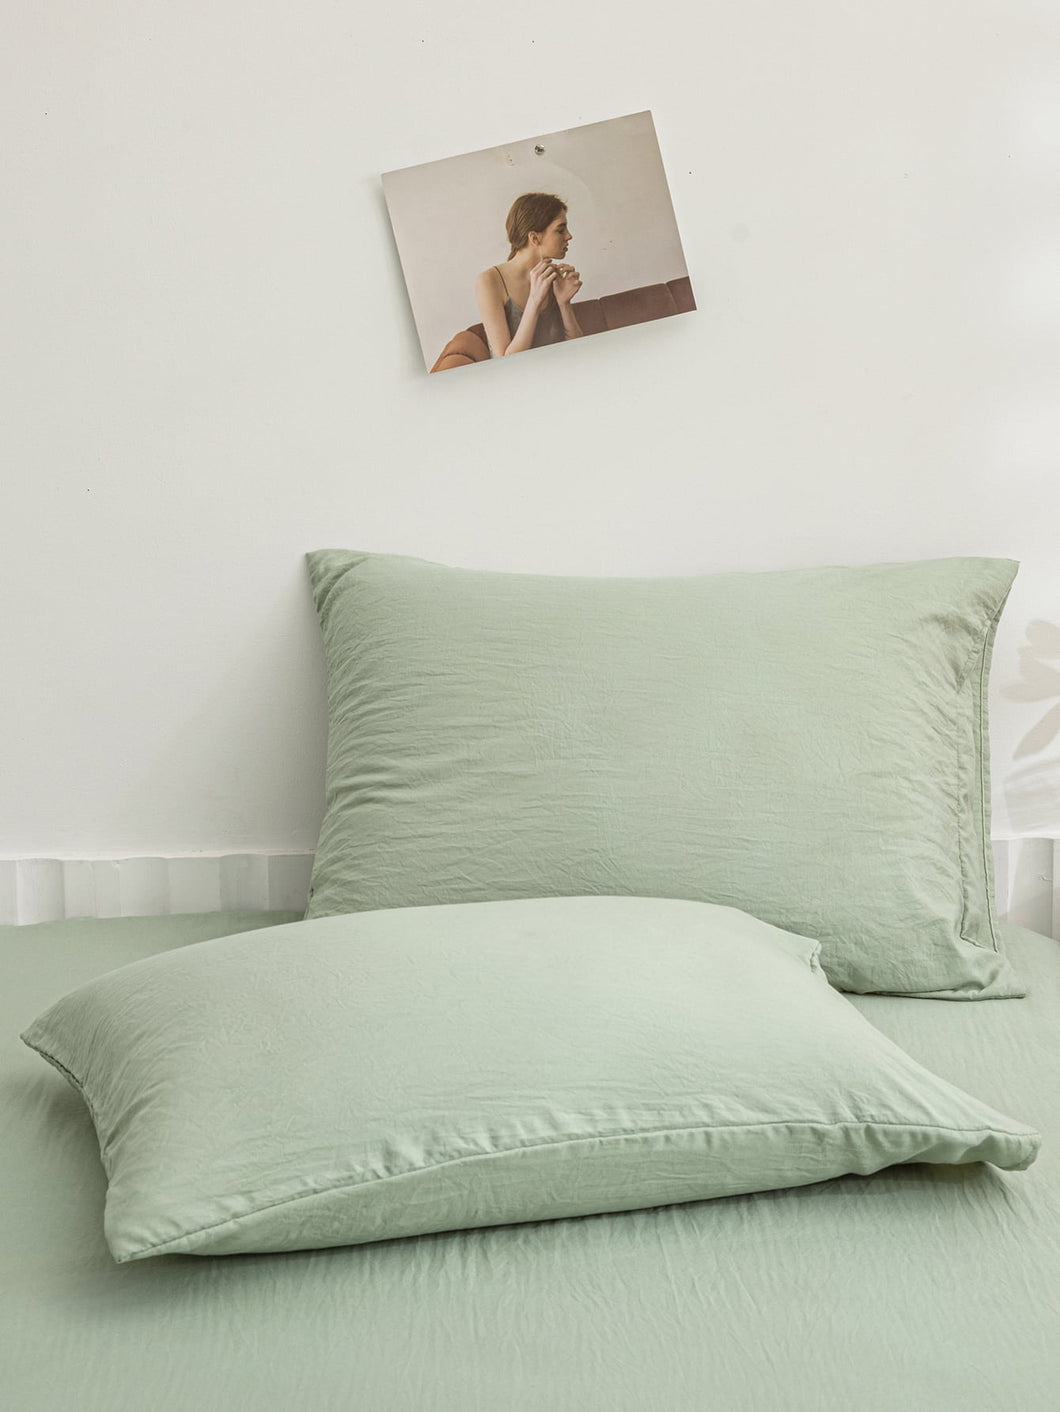 Pillowcases Set of 2 (Green)